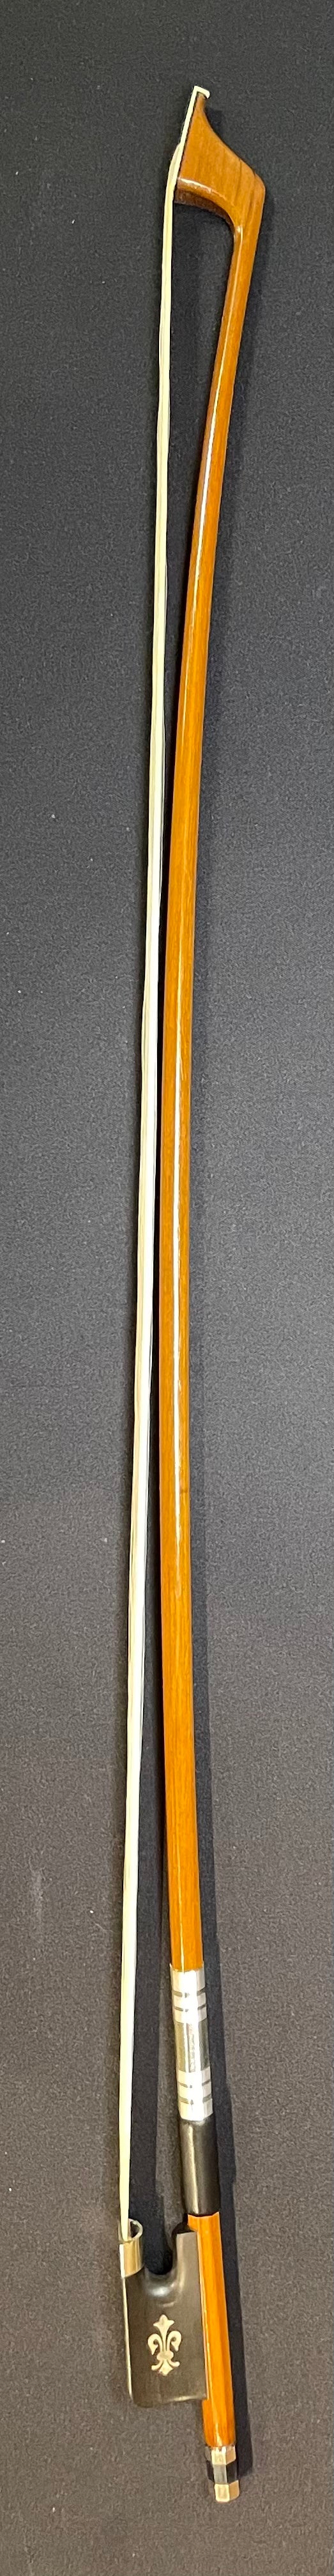 4/4 Cello Bow - CB08 Wood Model